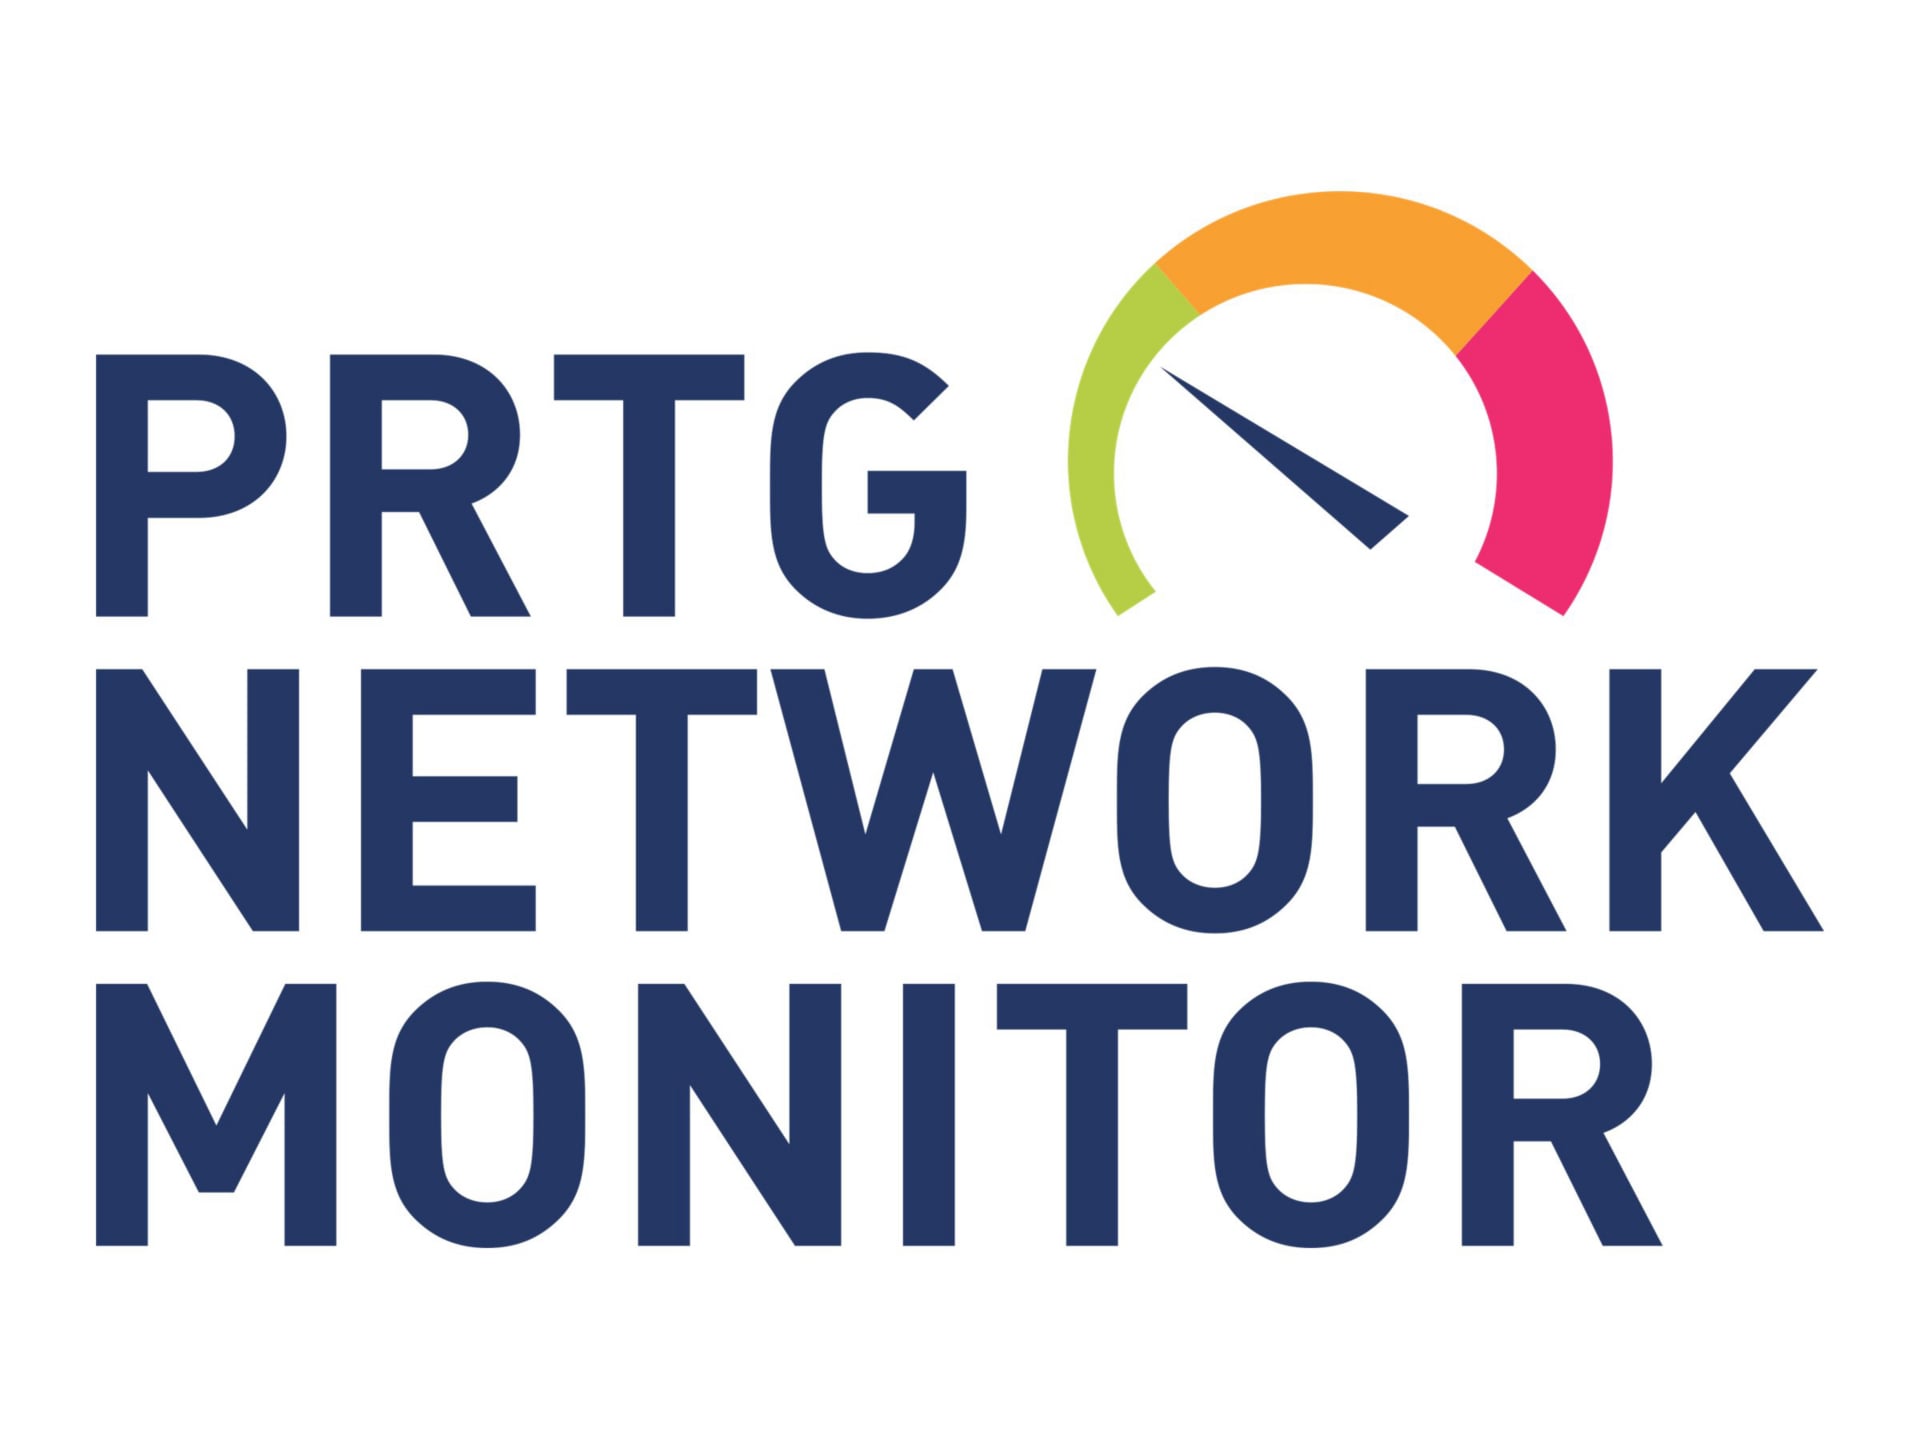 PRTG Network Monitor 2500 - license + 5 Years Maintenance - 2500 sensors, 1 server installation